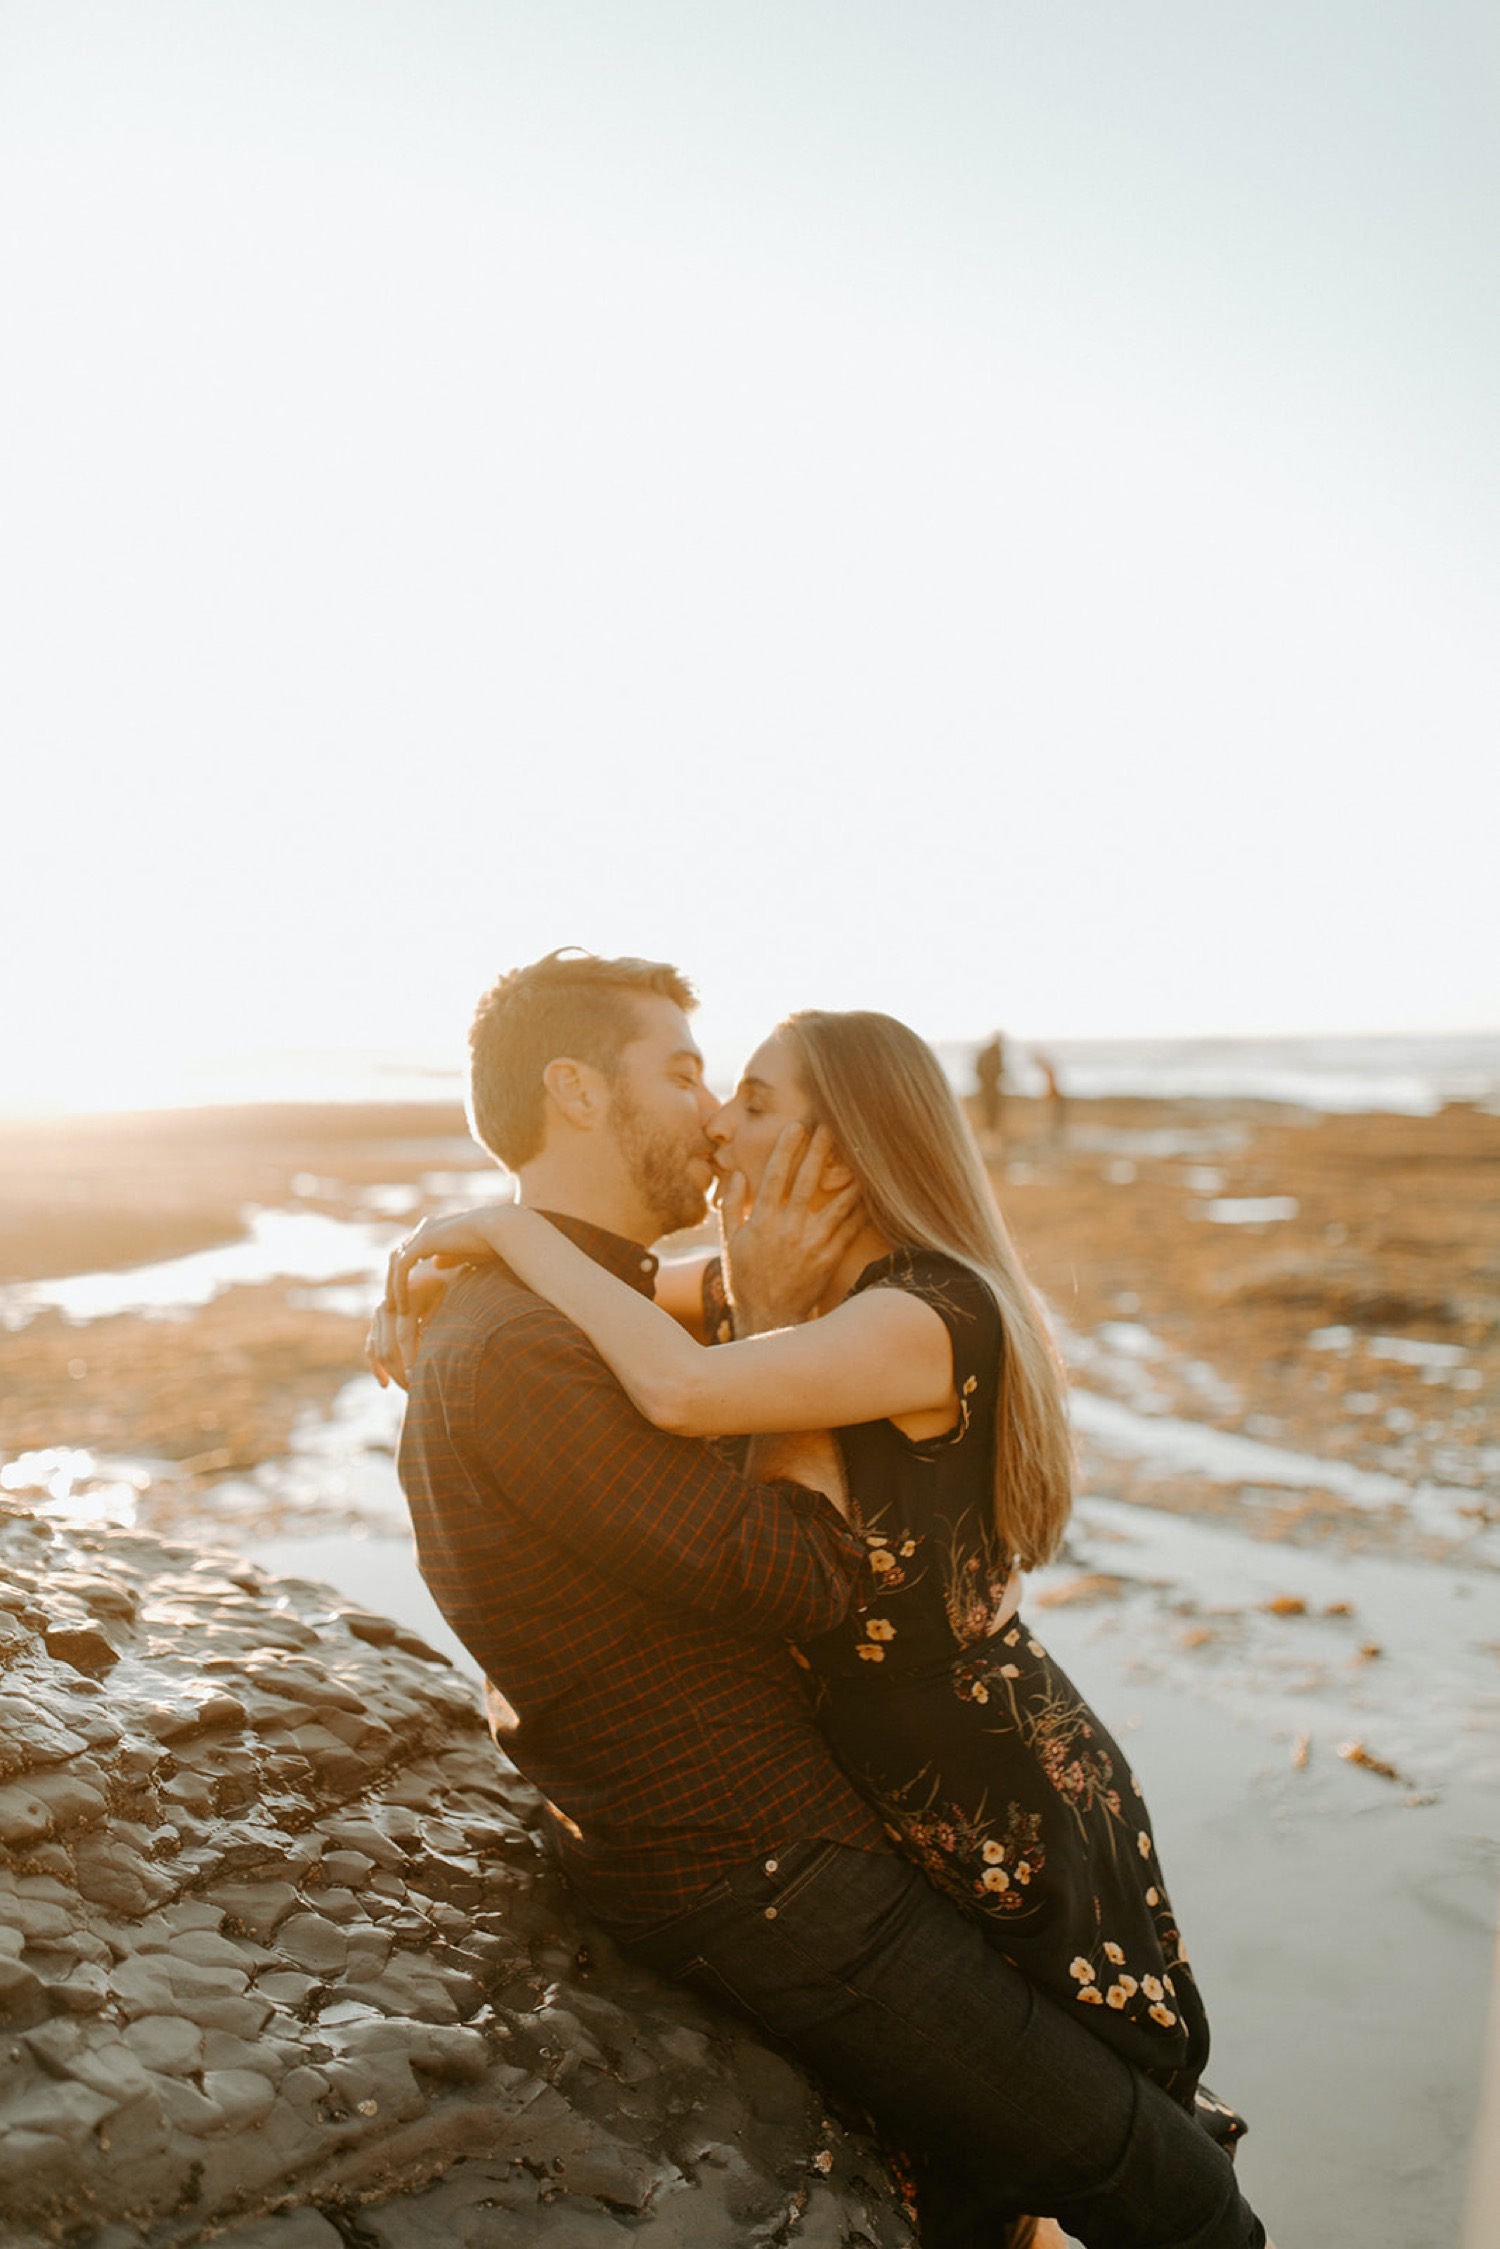 Romantic Couple in Seaside · Free Stock Photo